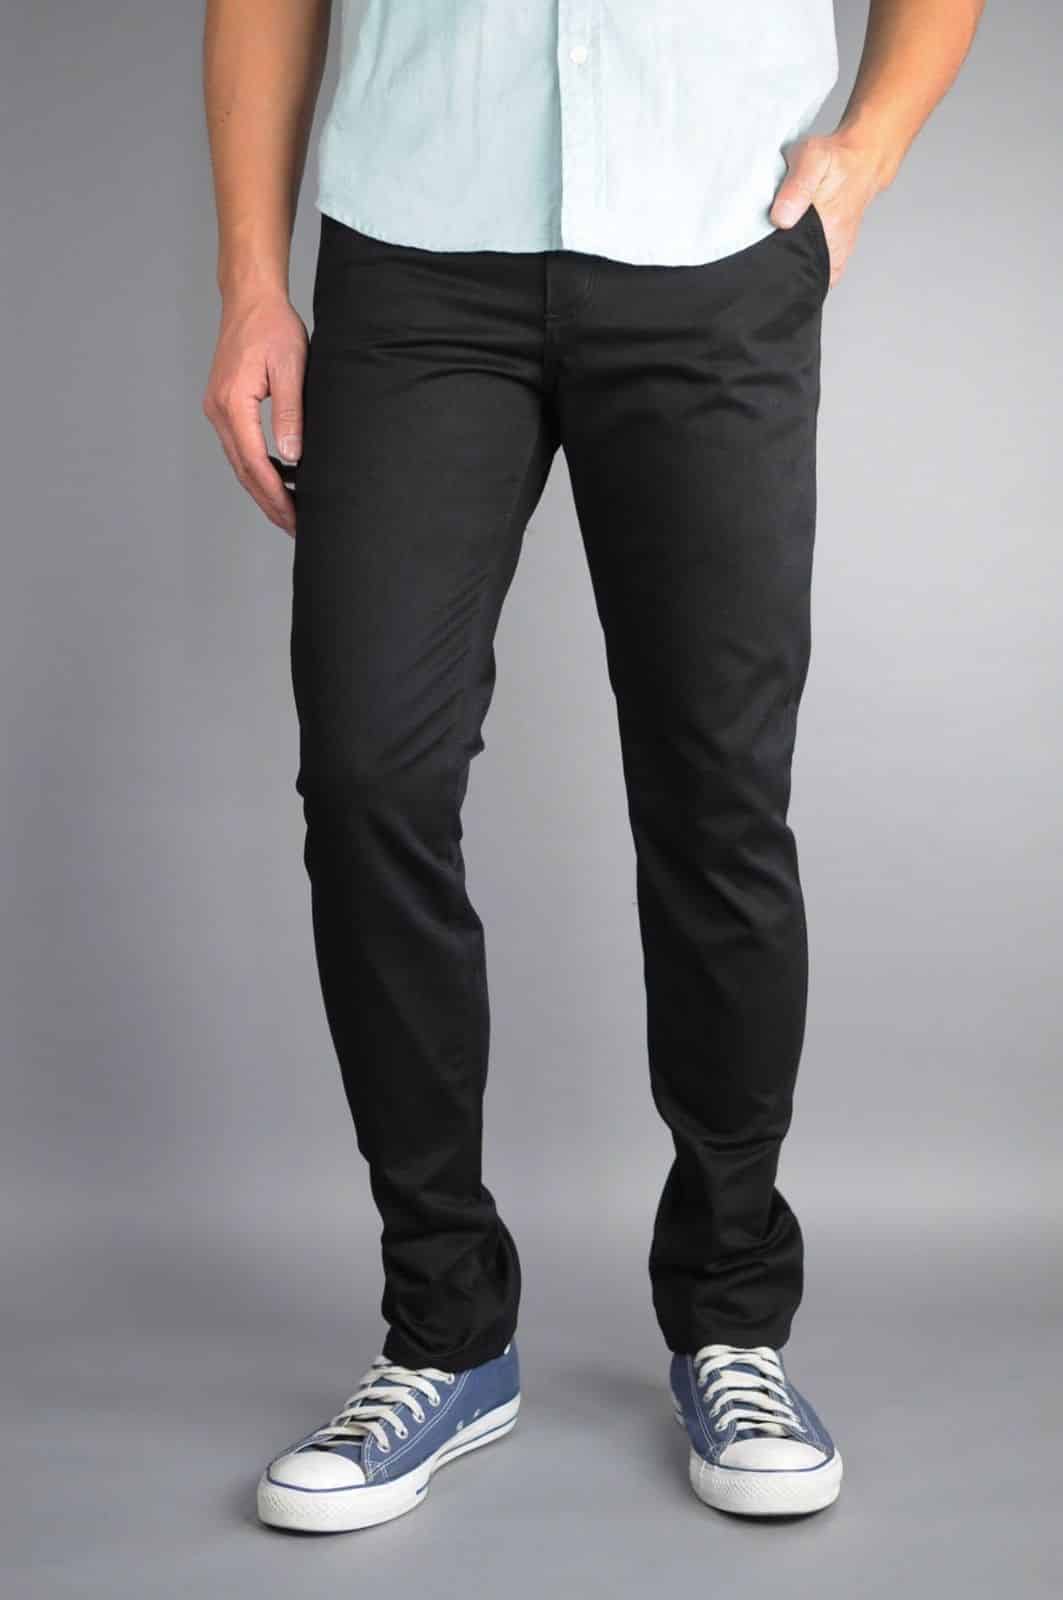 Black Chino Pants by Neo Blue Pants Premium